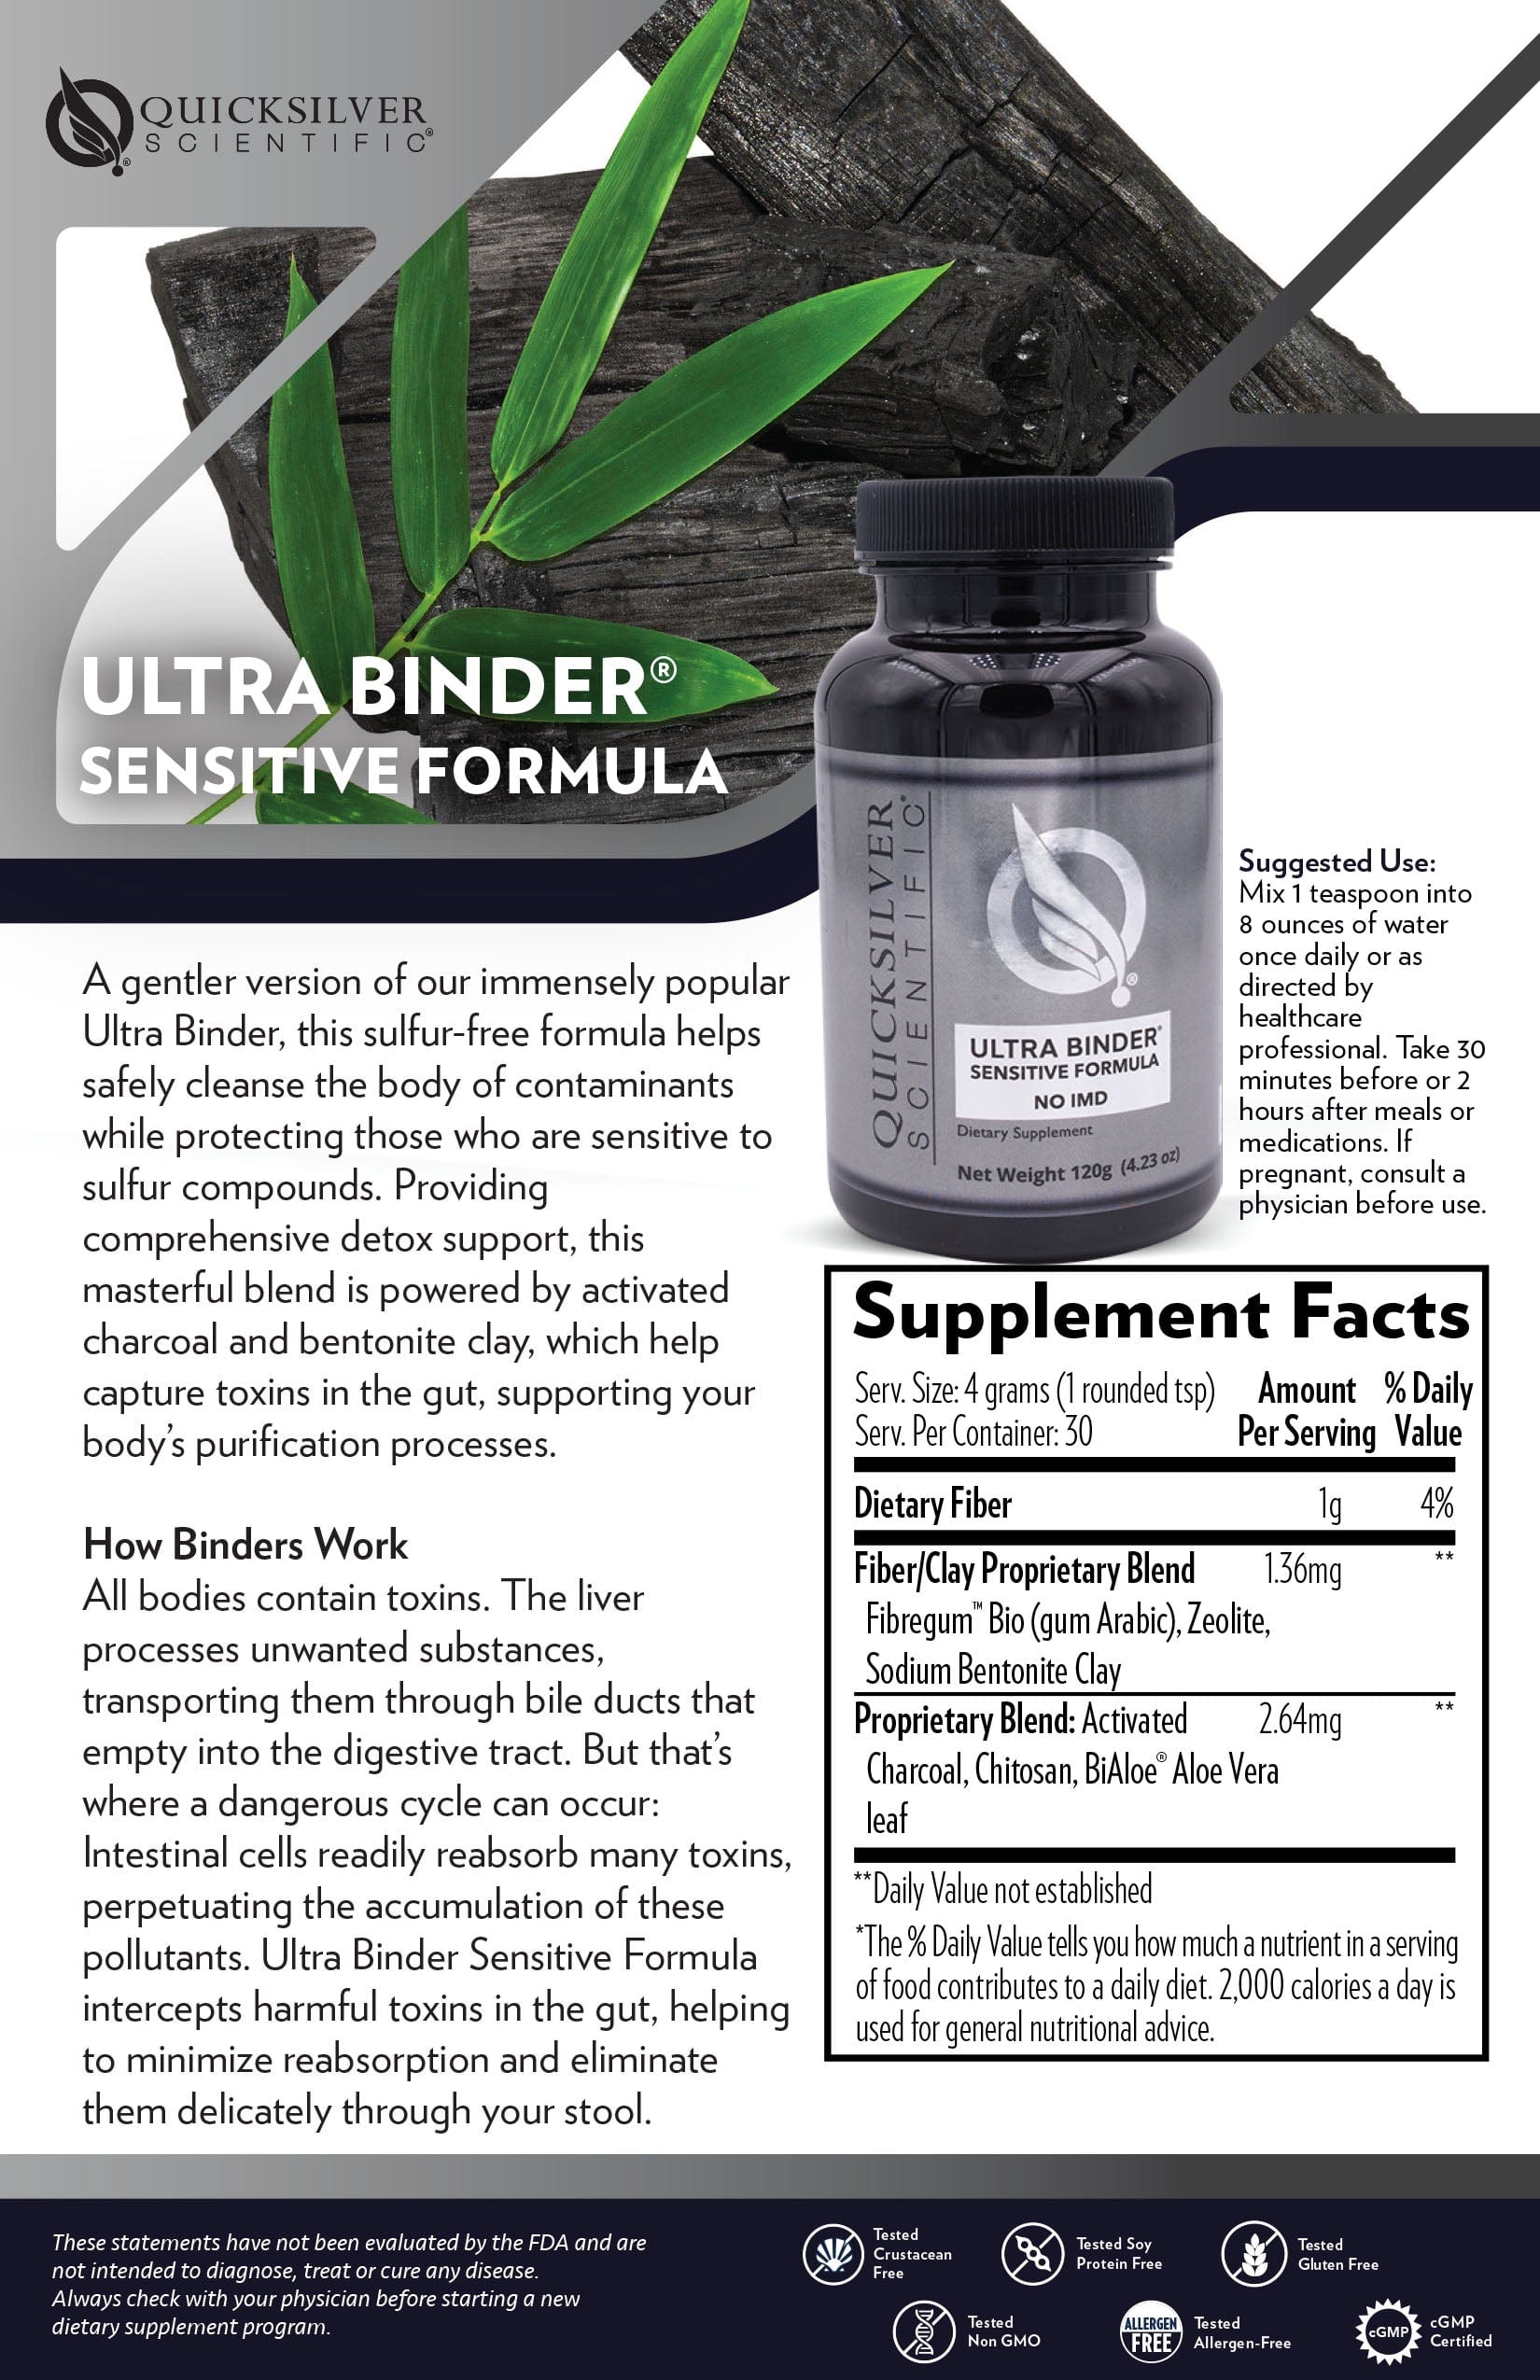 Ultra Binder® Sensitive - Quicksilver Scientific info